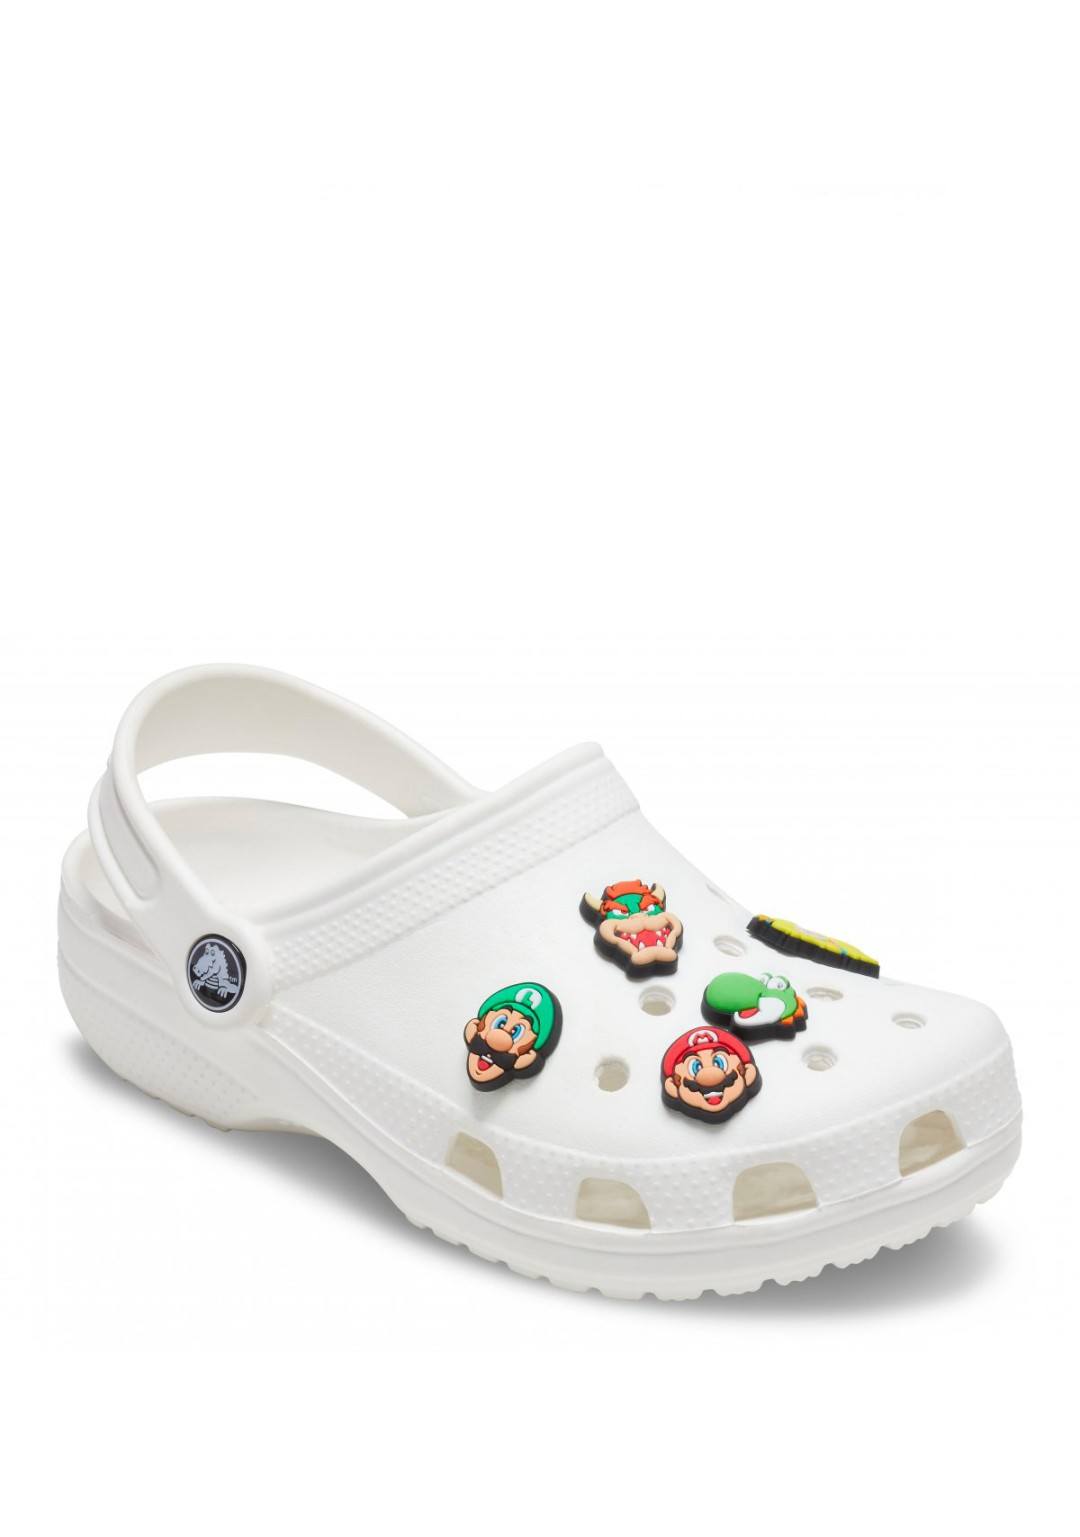 Crocs - Super Mario - Unisex bambino - 10007701